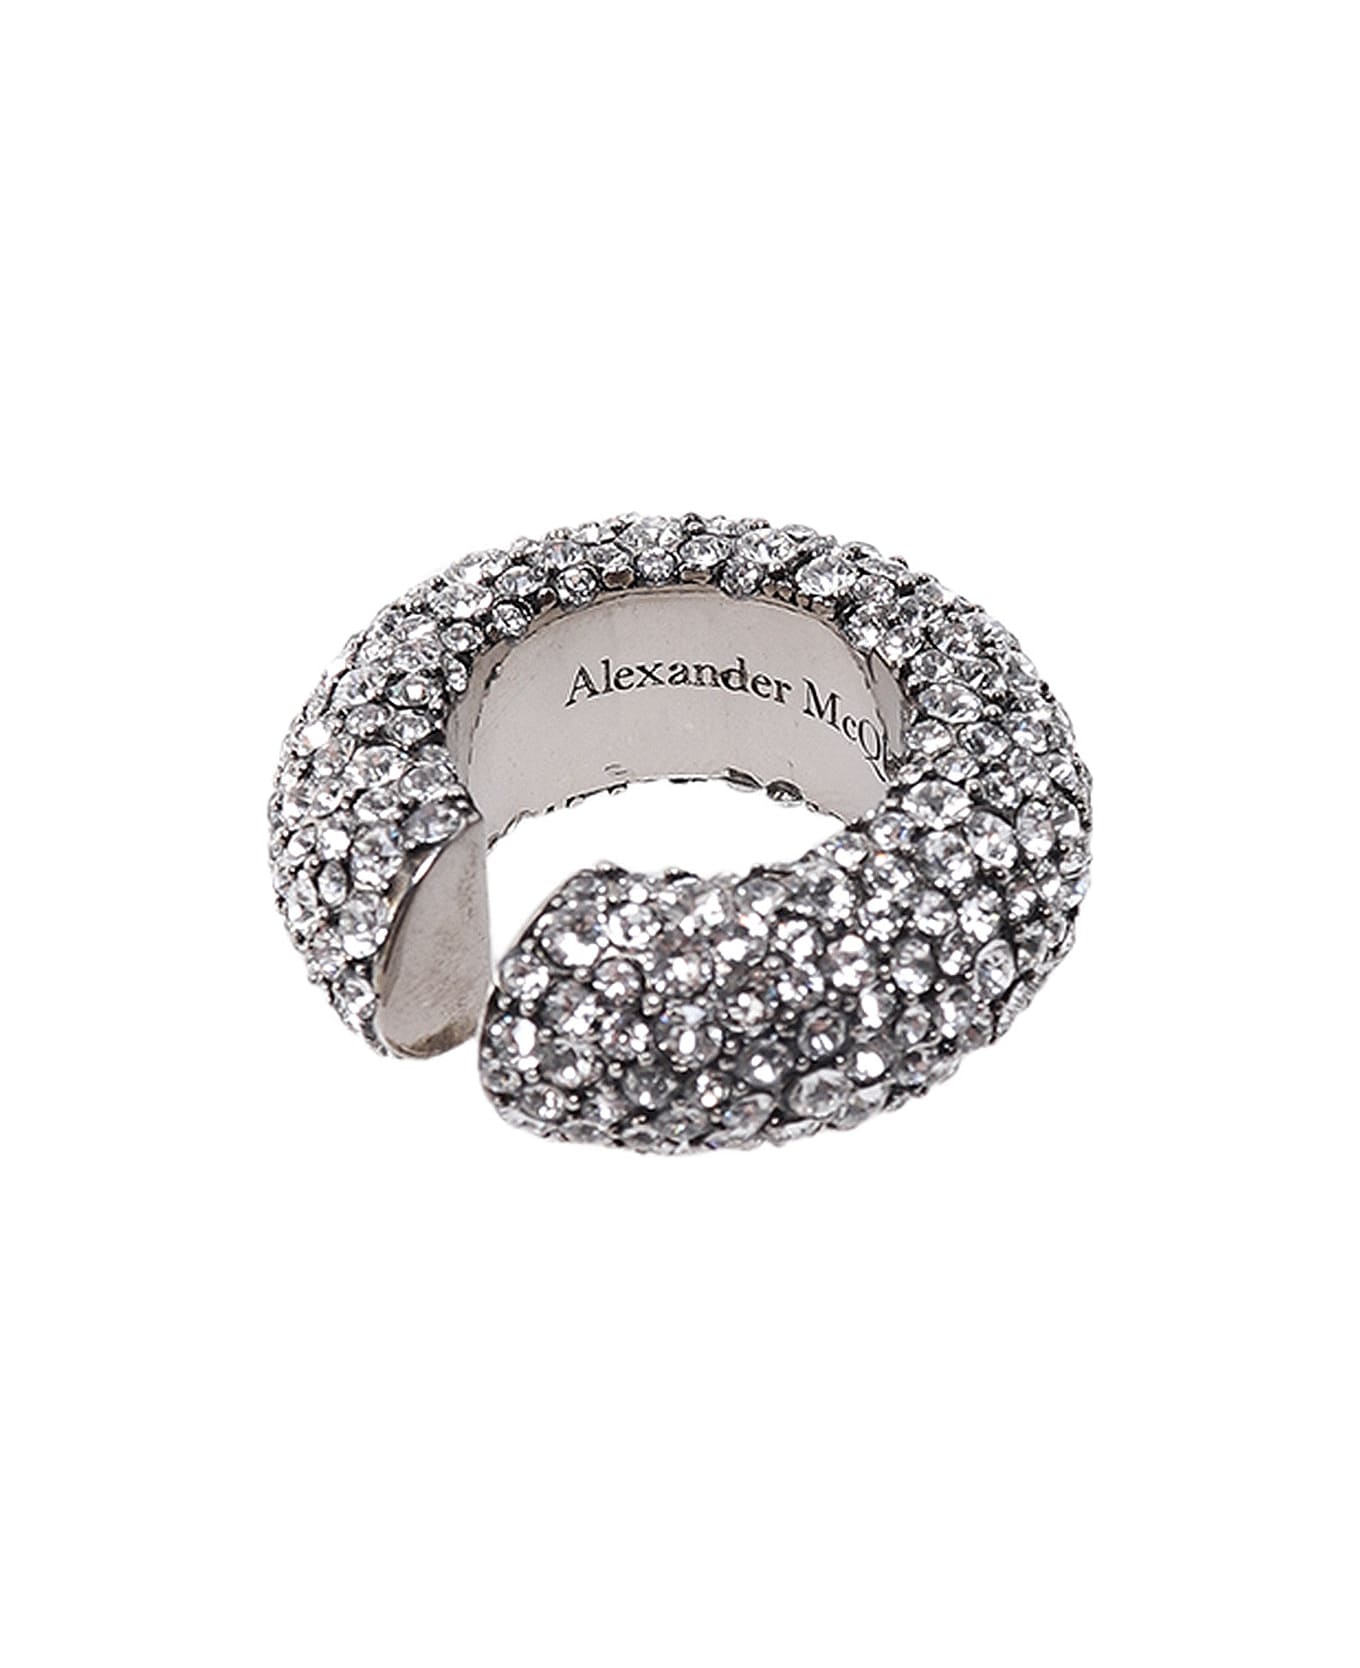 Alexander McQueen Earring - Silver